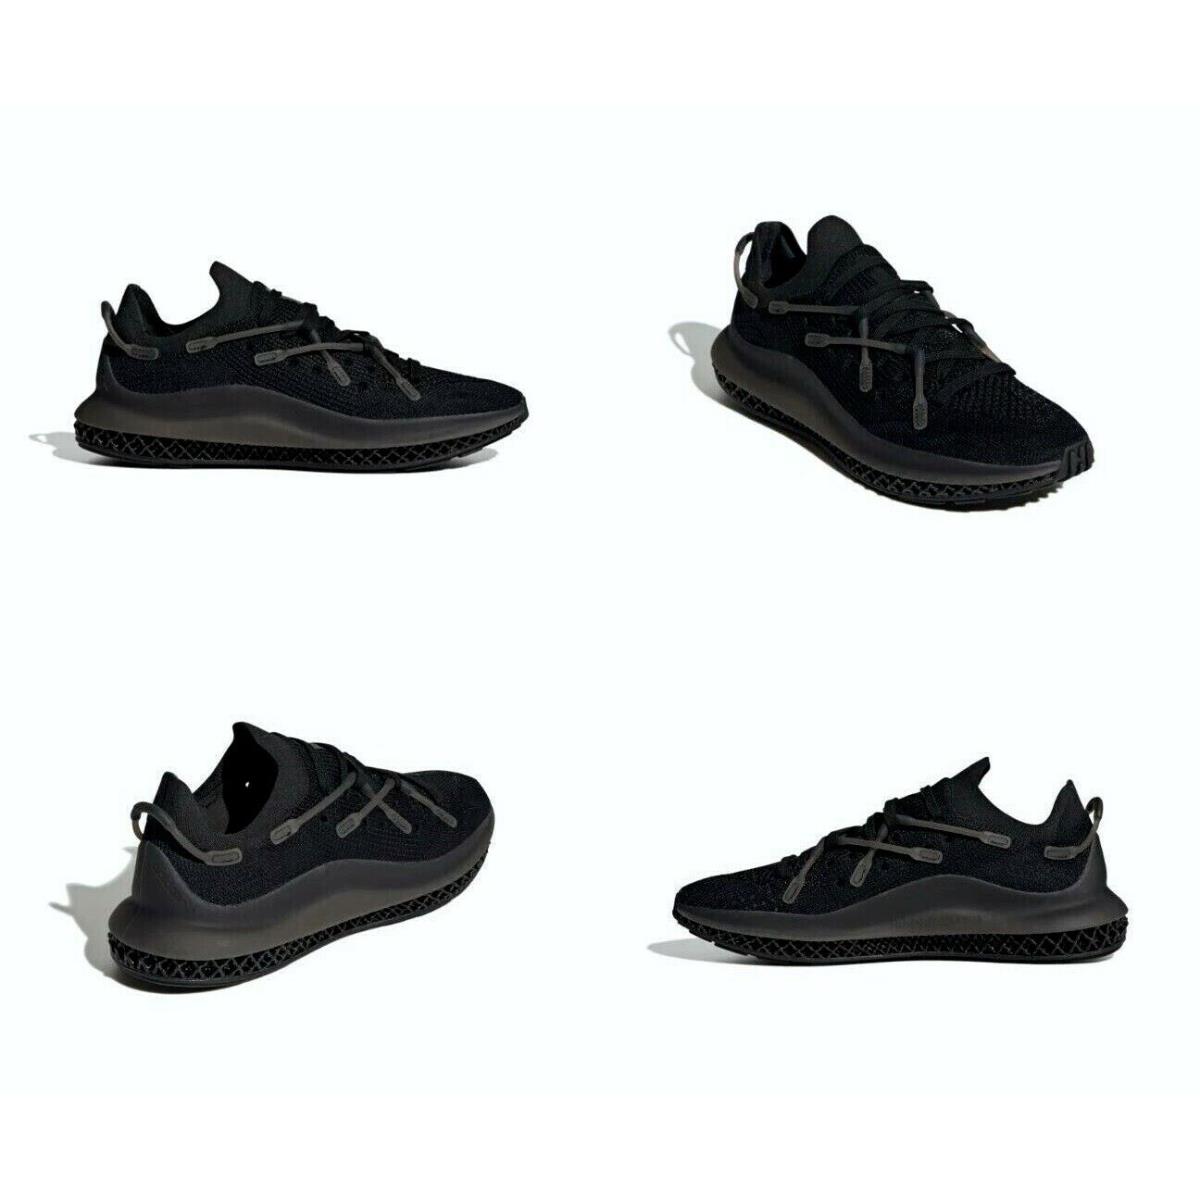 Adidas Originals 4D Fusio Triple Black Running Shoes Mens Size 12 H04510